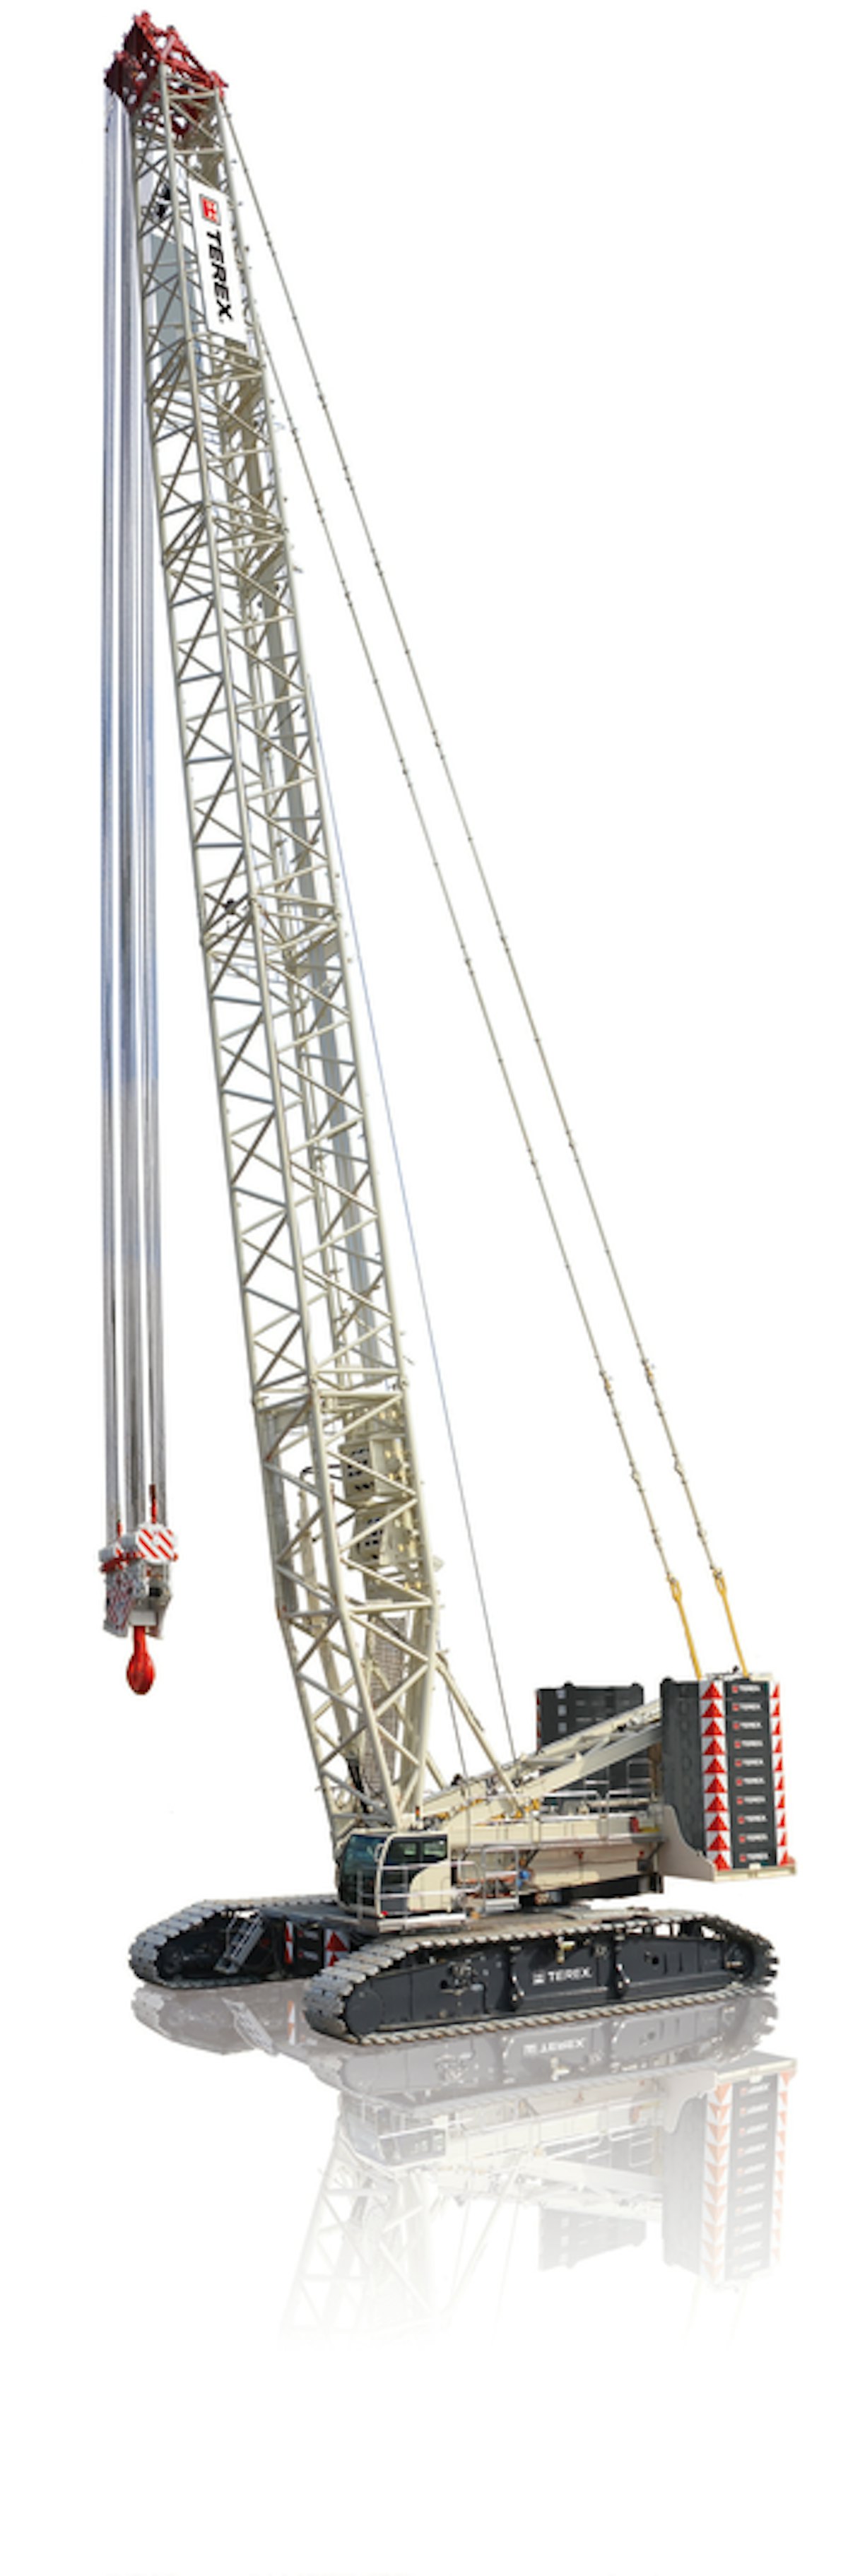 Terex launches new Superlift 650t crawler crane - Construction Week Online